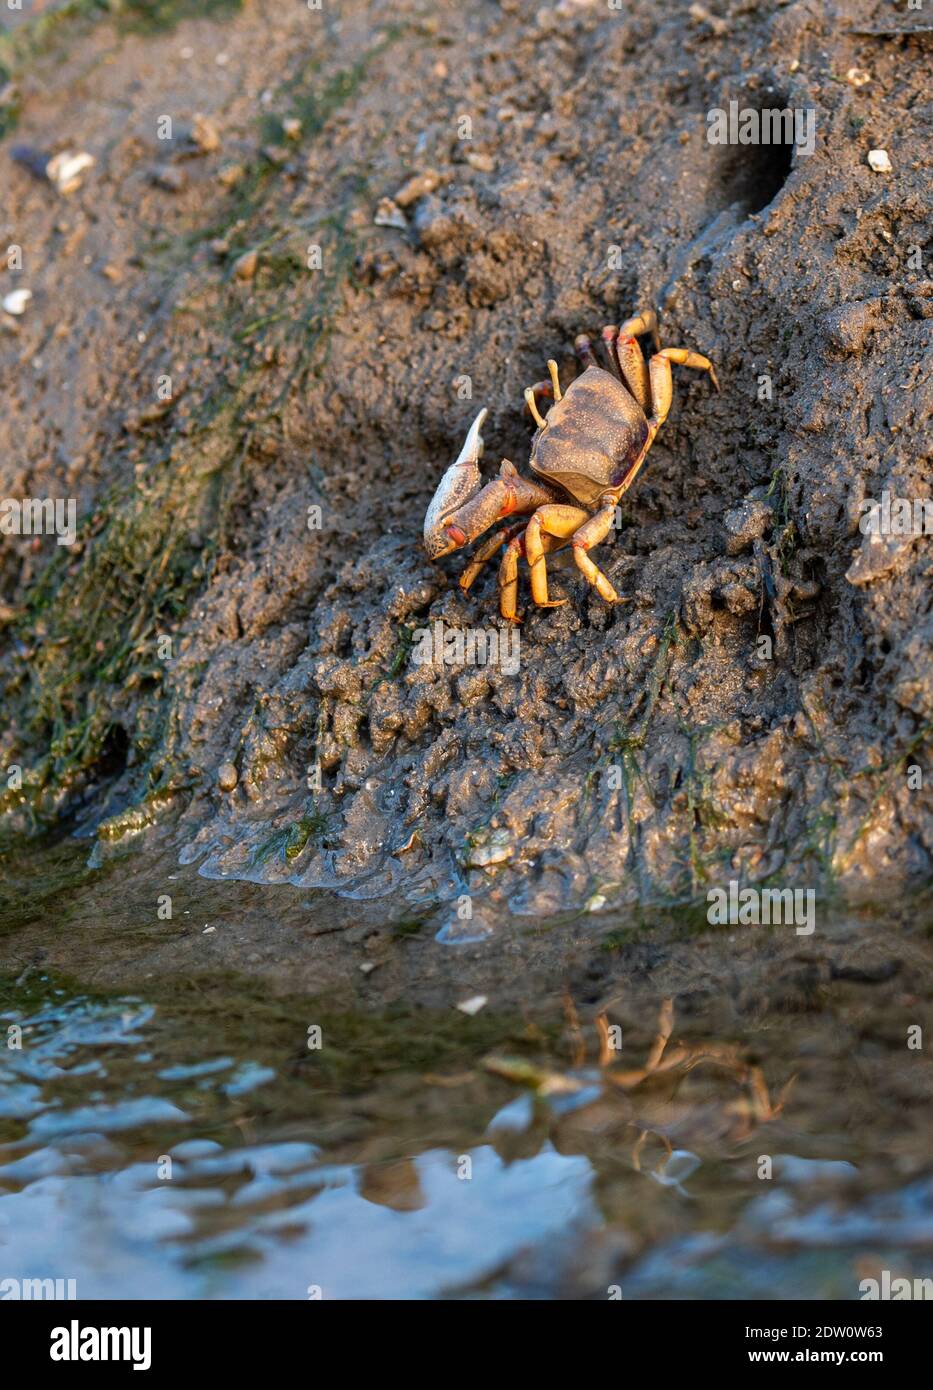 Big-legged sea crabs in their habitat Stock Photo